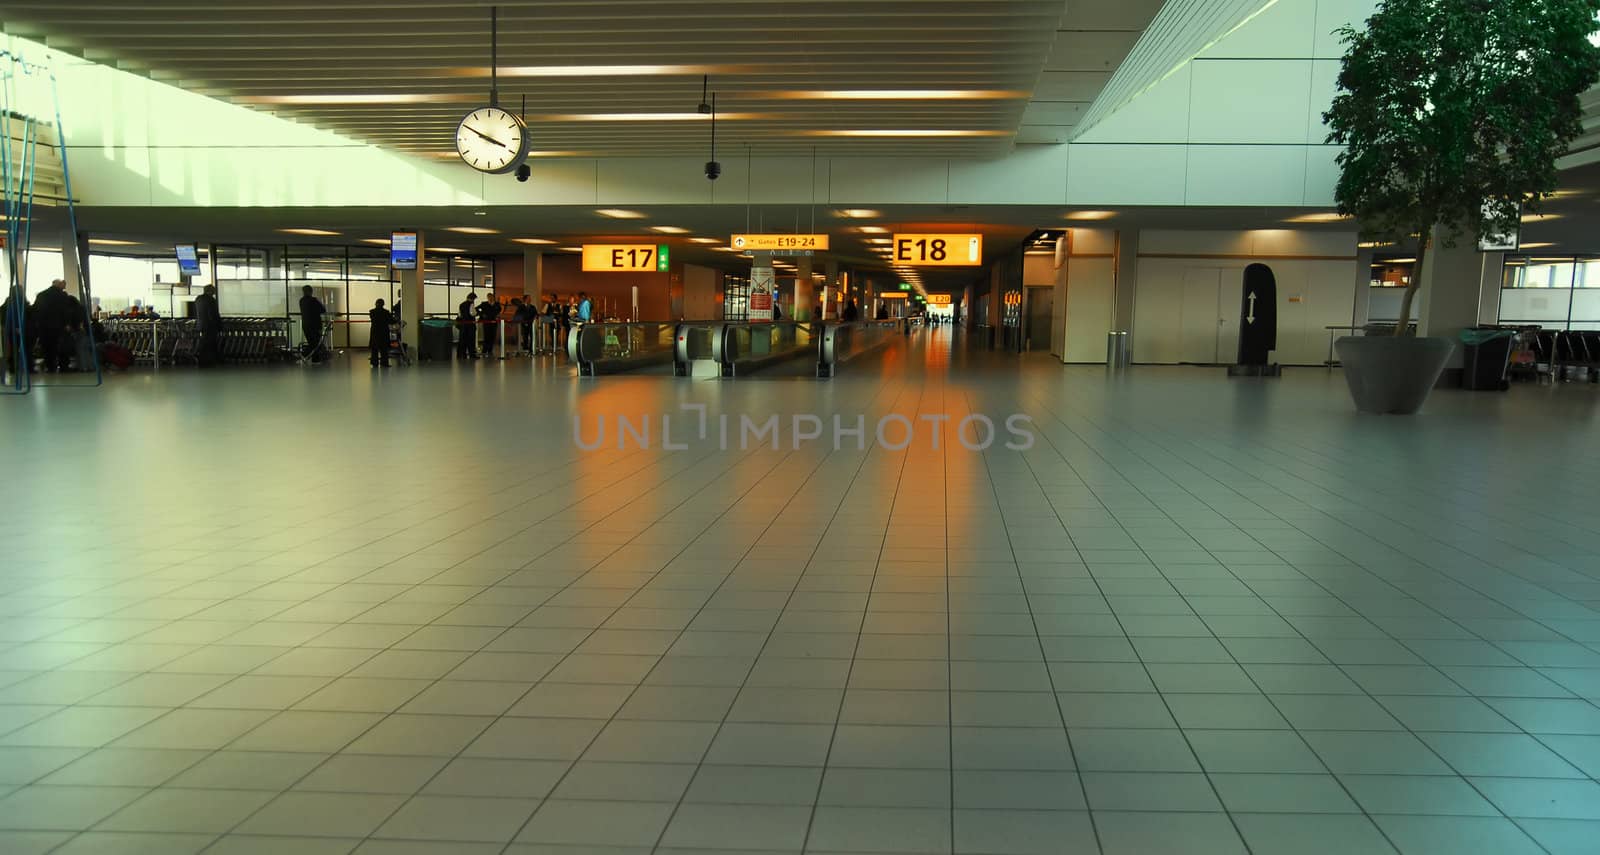 Amsterdam Schiphol airport interior